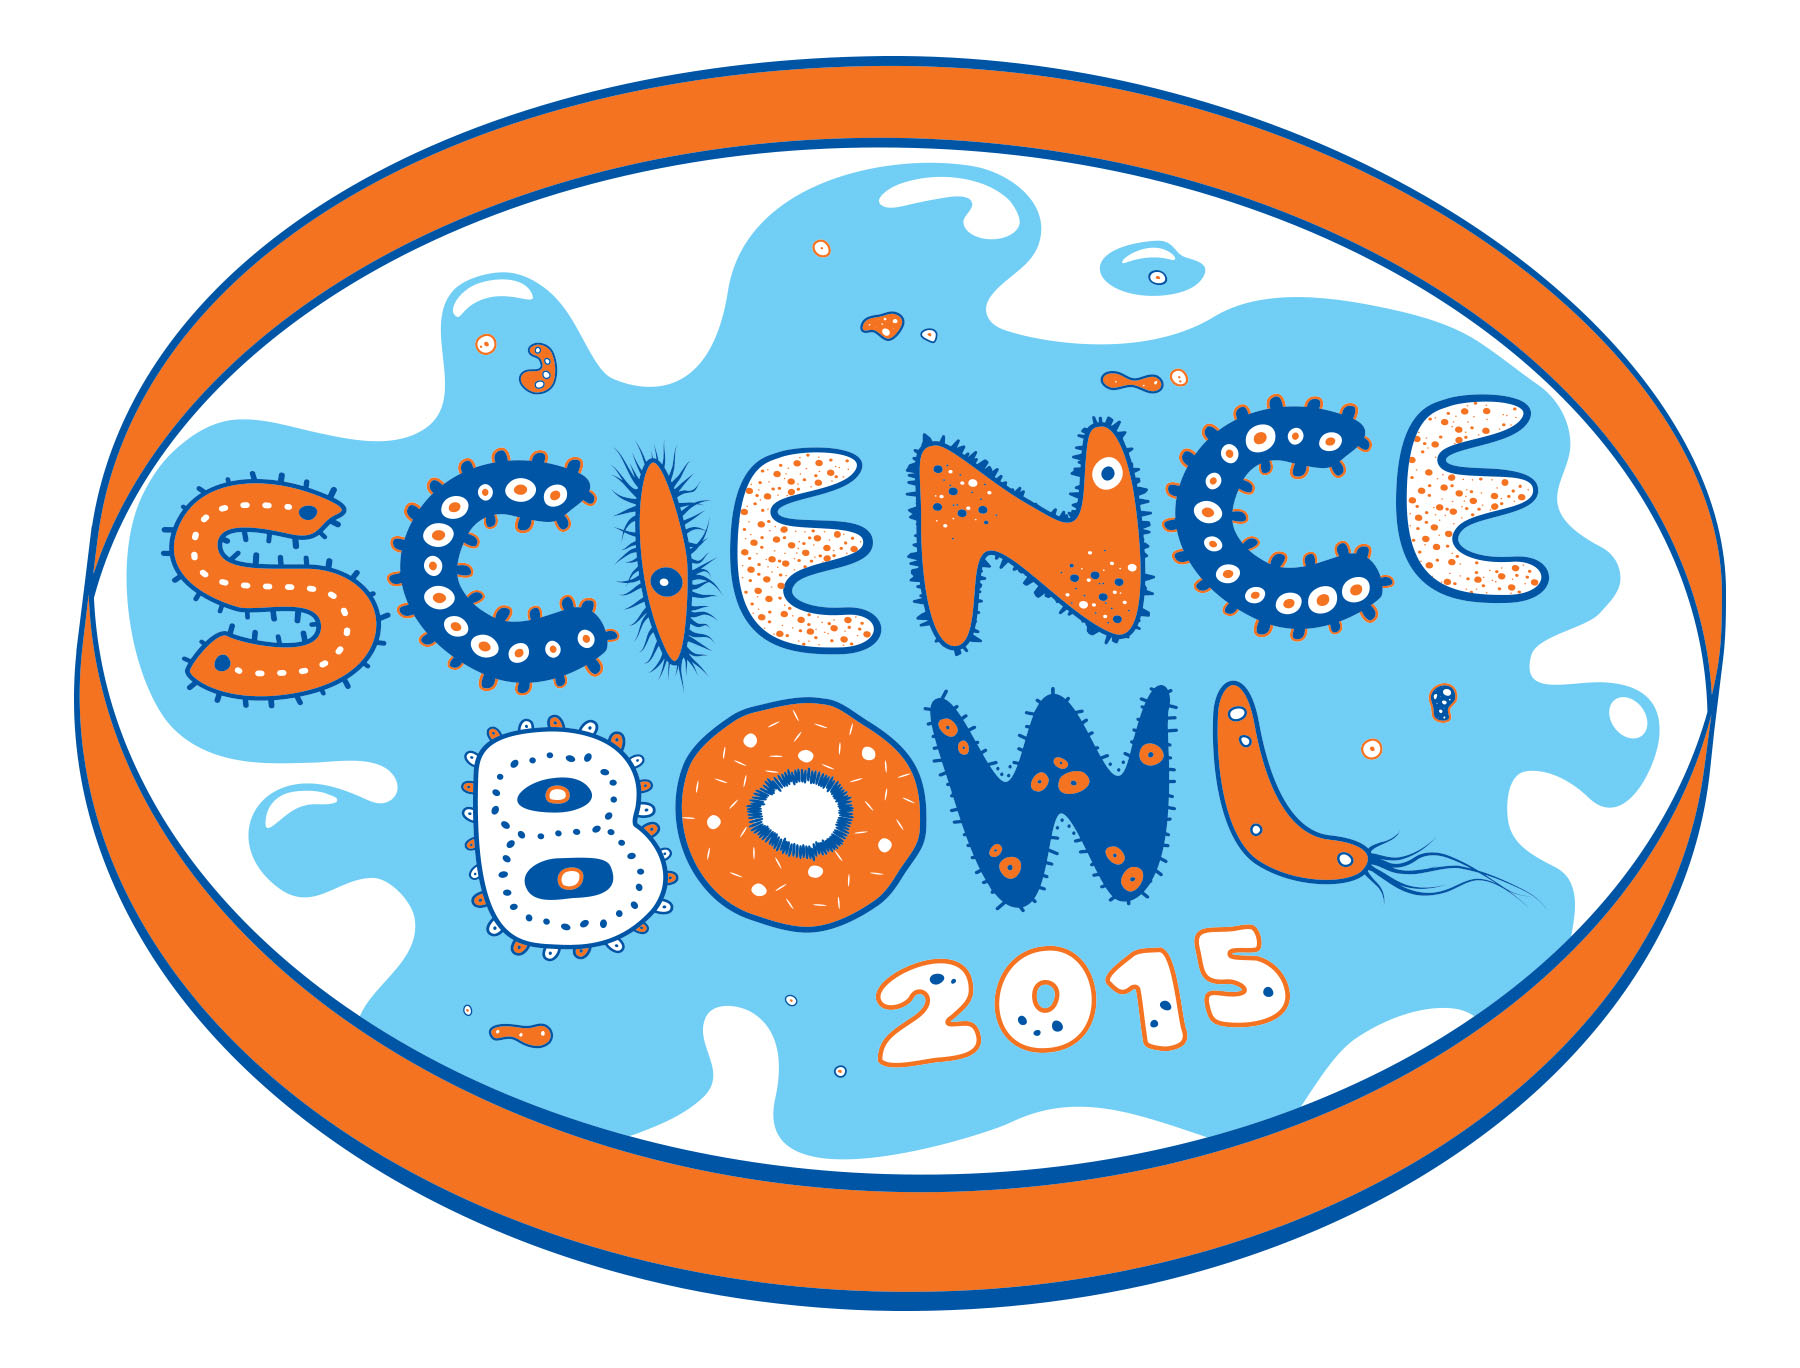 Science Bowl 2015 Branding